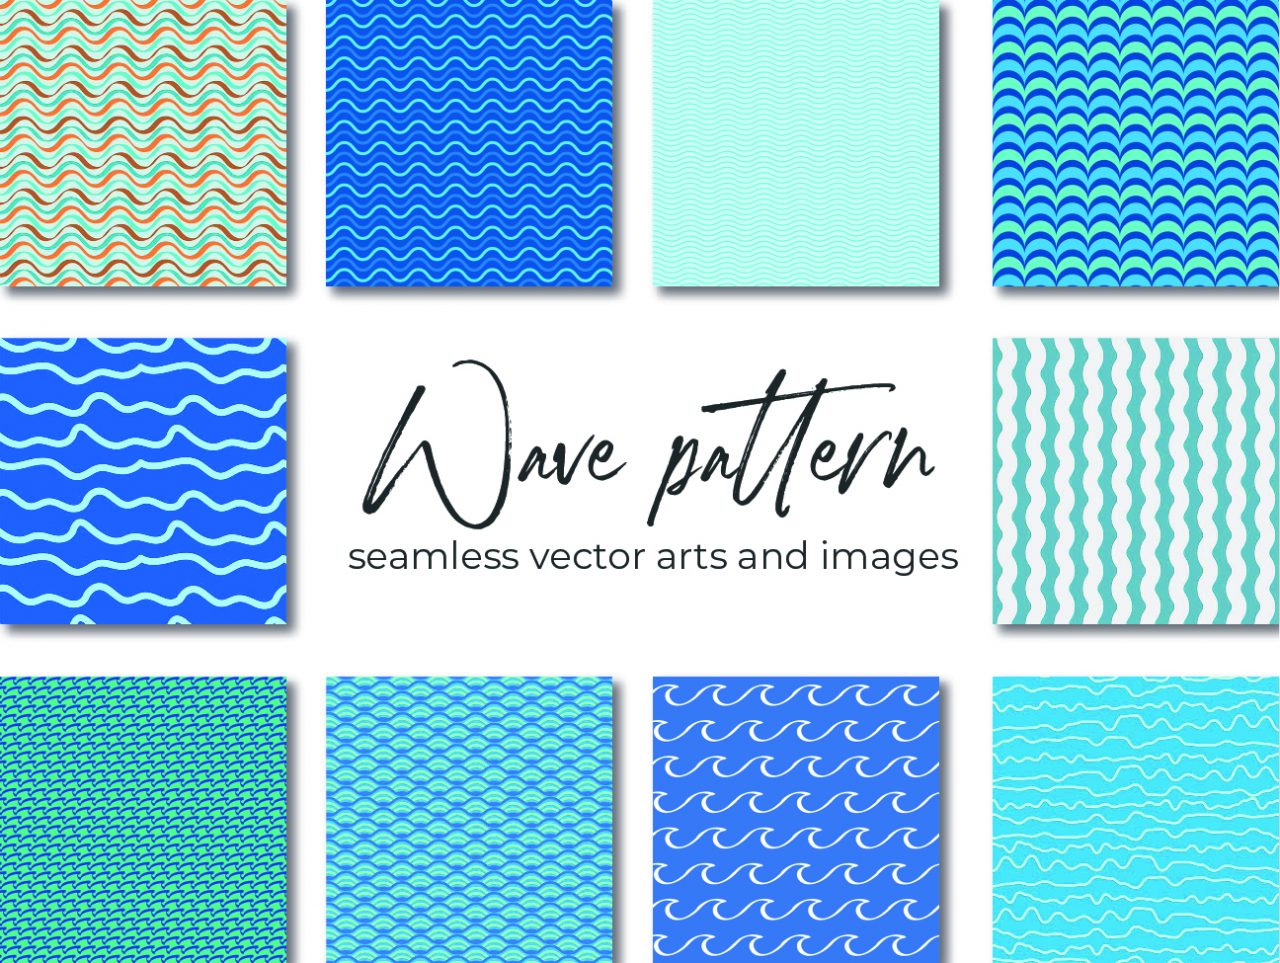 wave patterns